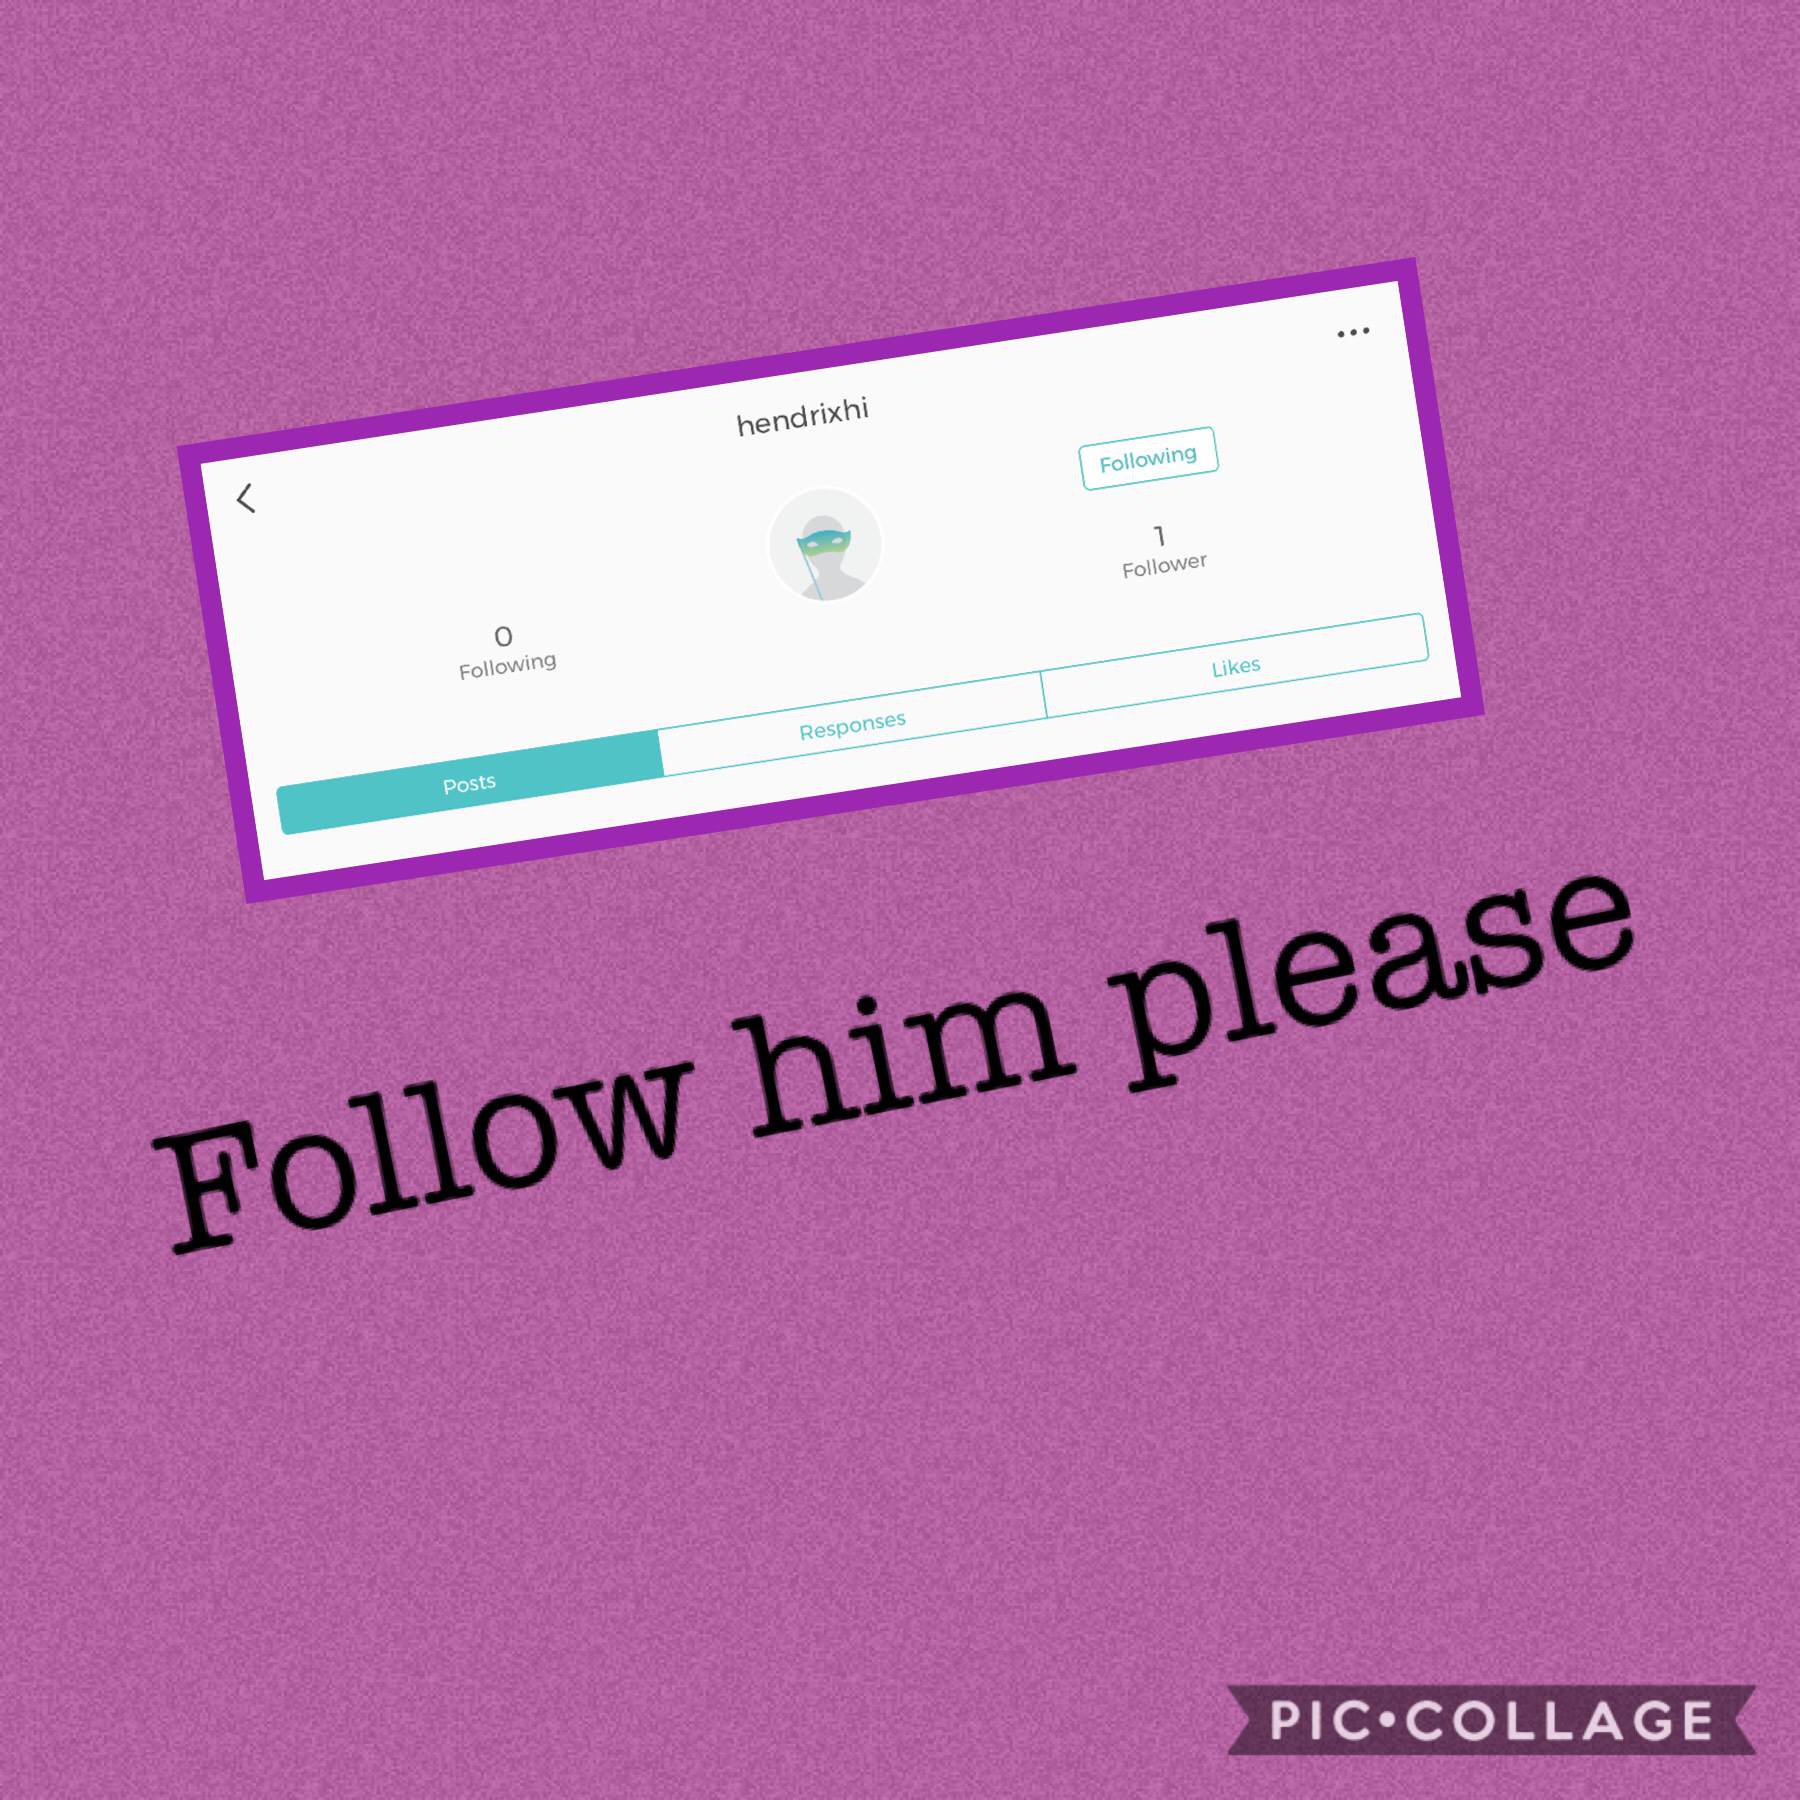 Please follow him